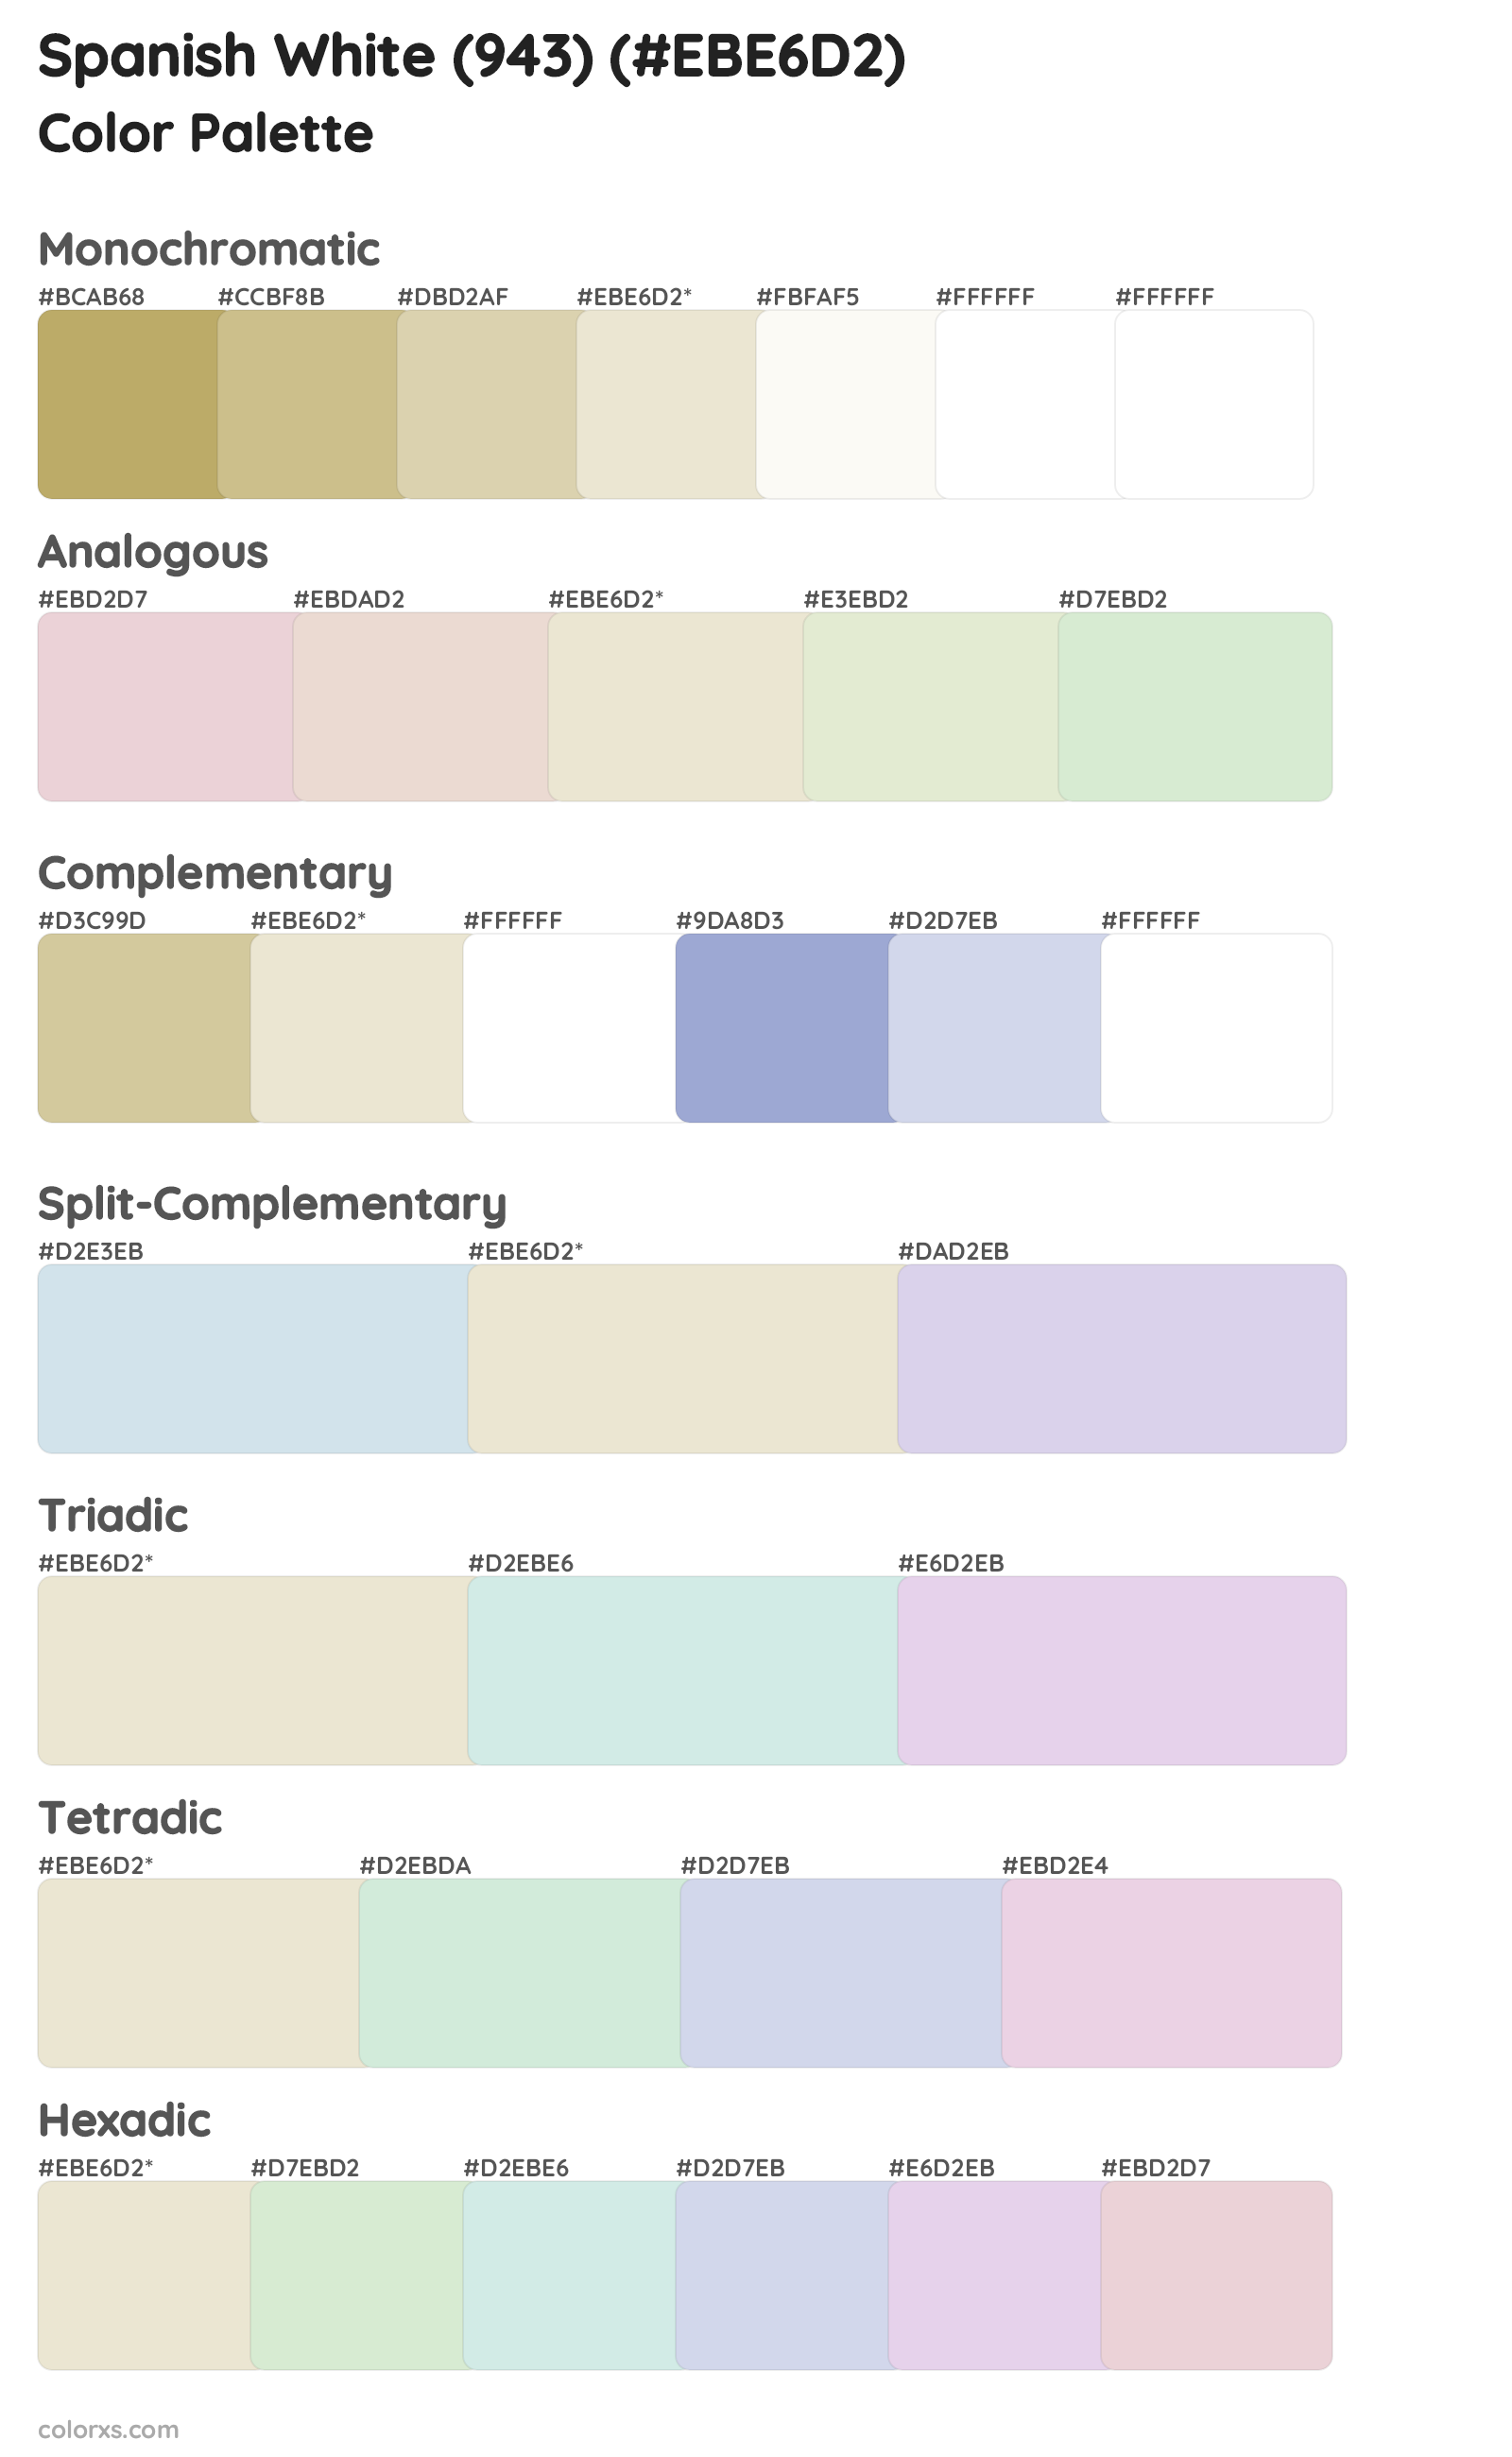 Spanish White (943) Color Scheme Palettes